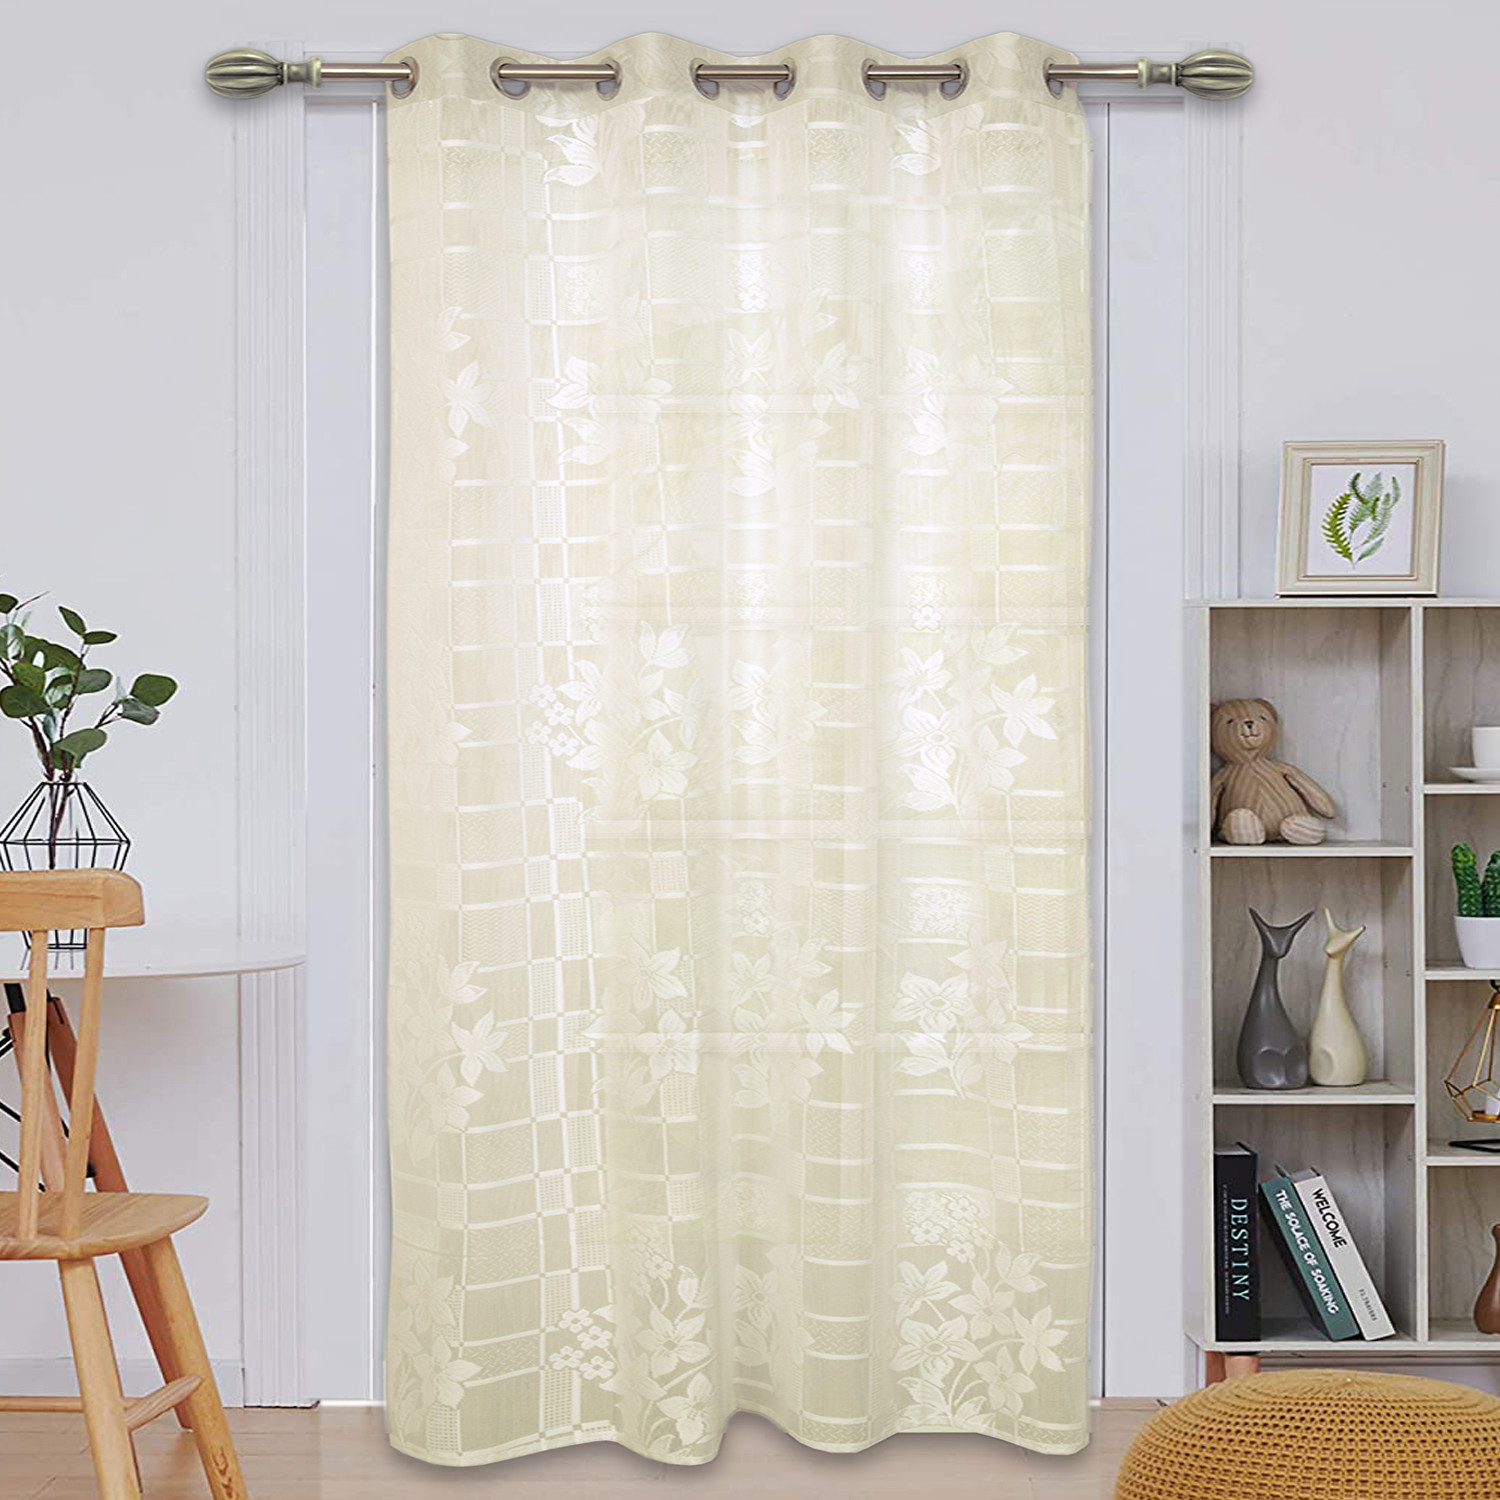 Kuber Industries Flower Print Home Decor Cotton Door Curtain With 8 Eyeletss, 7 Feet (Cream)